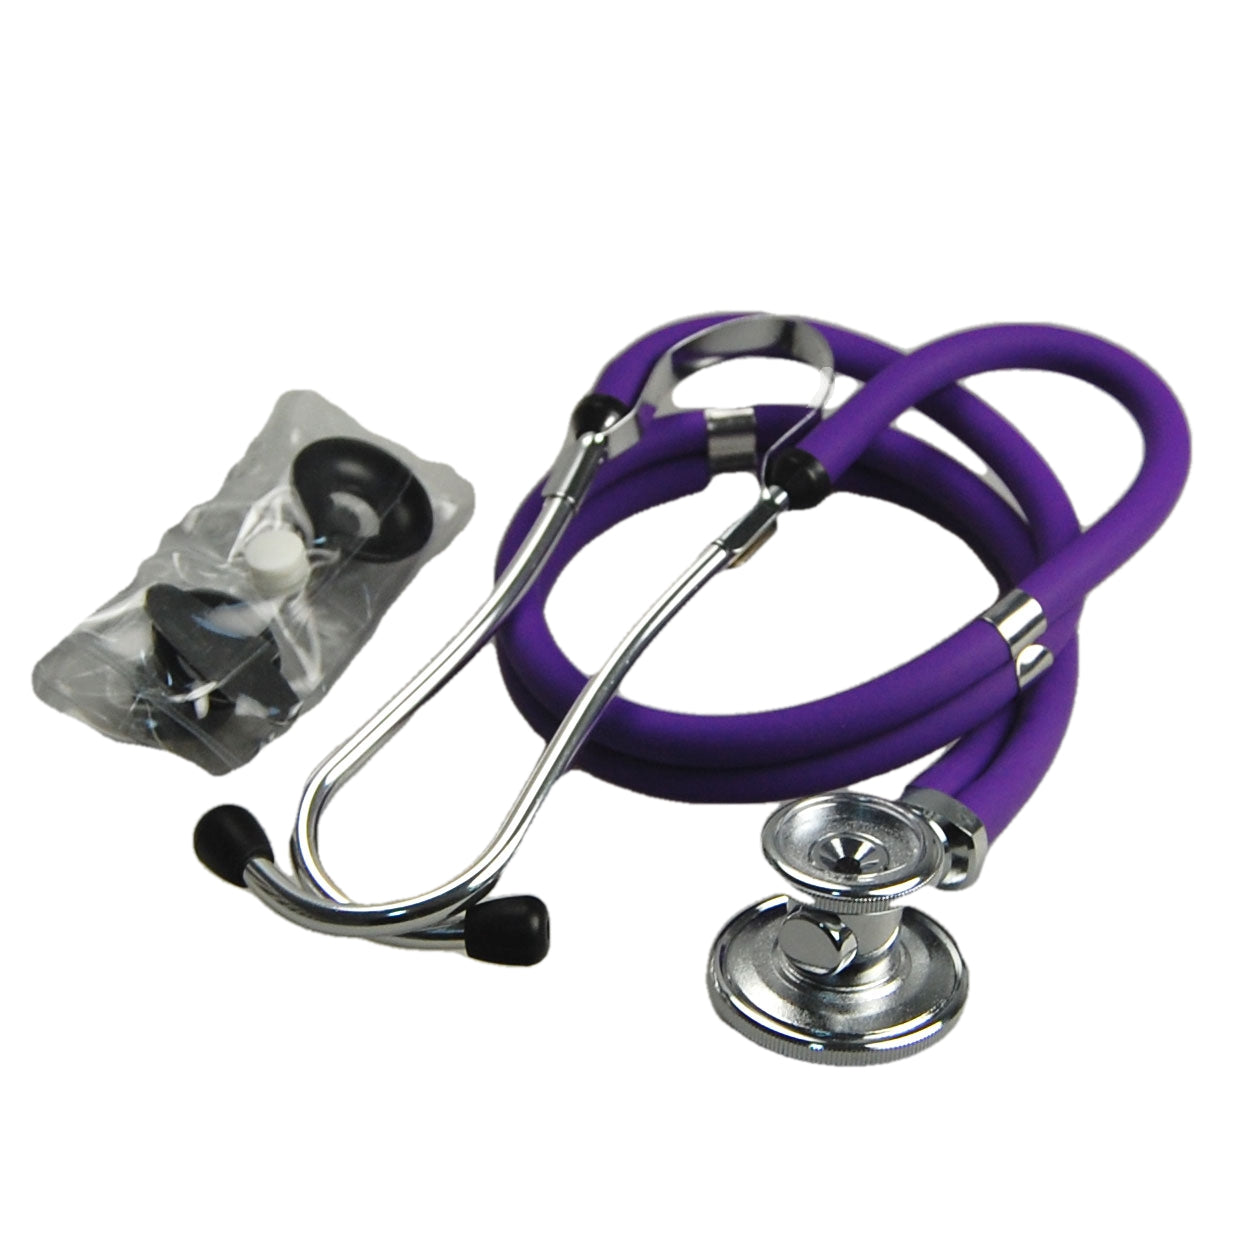 sprague rappaport stethoscope UK purple